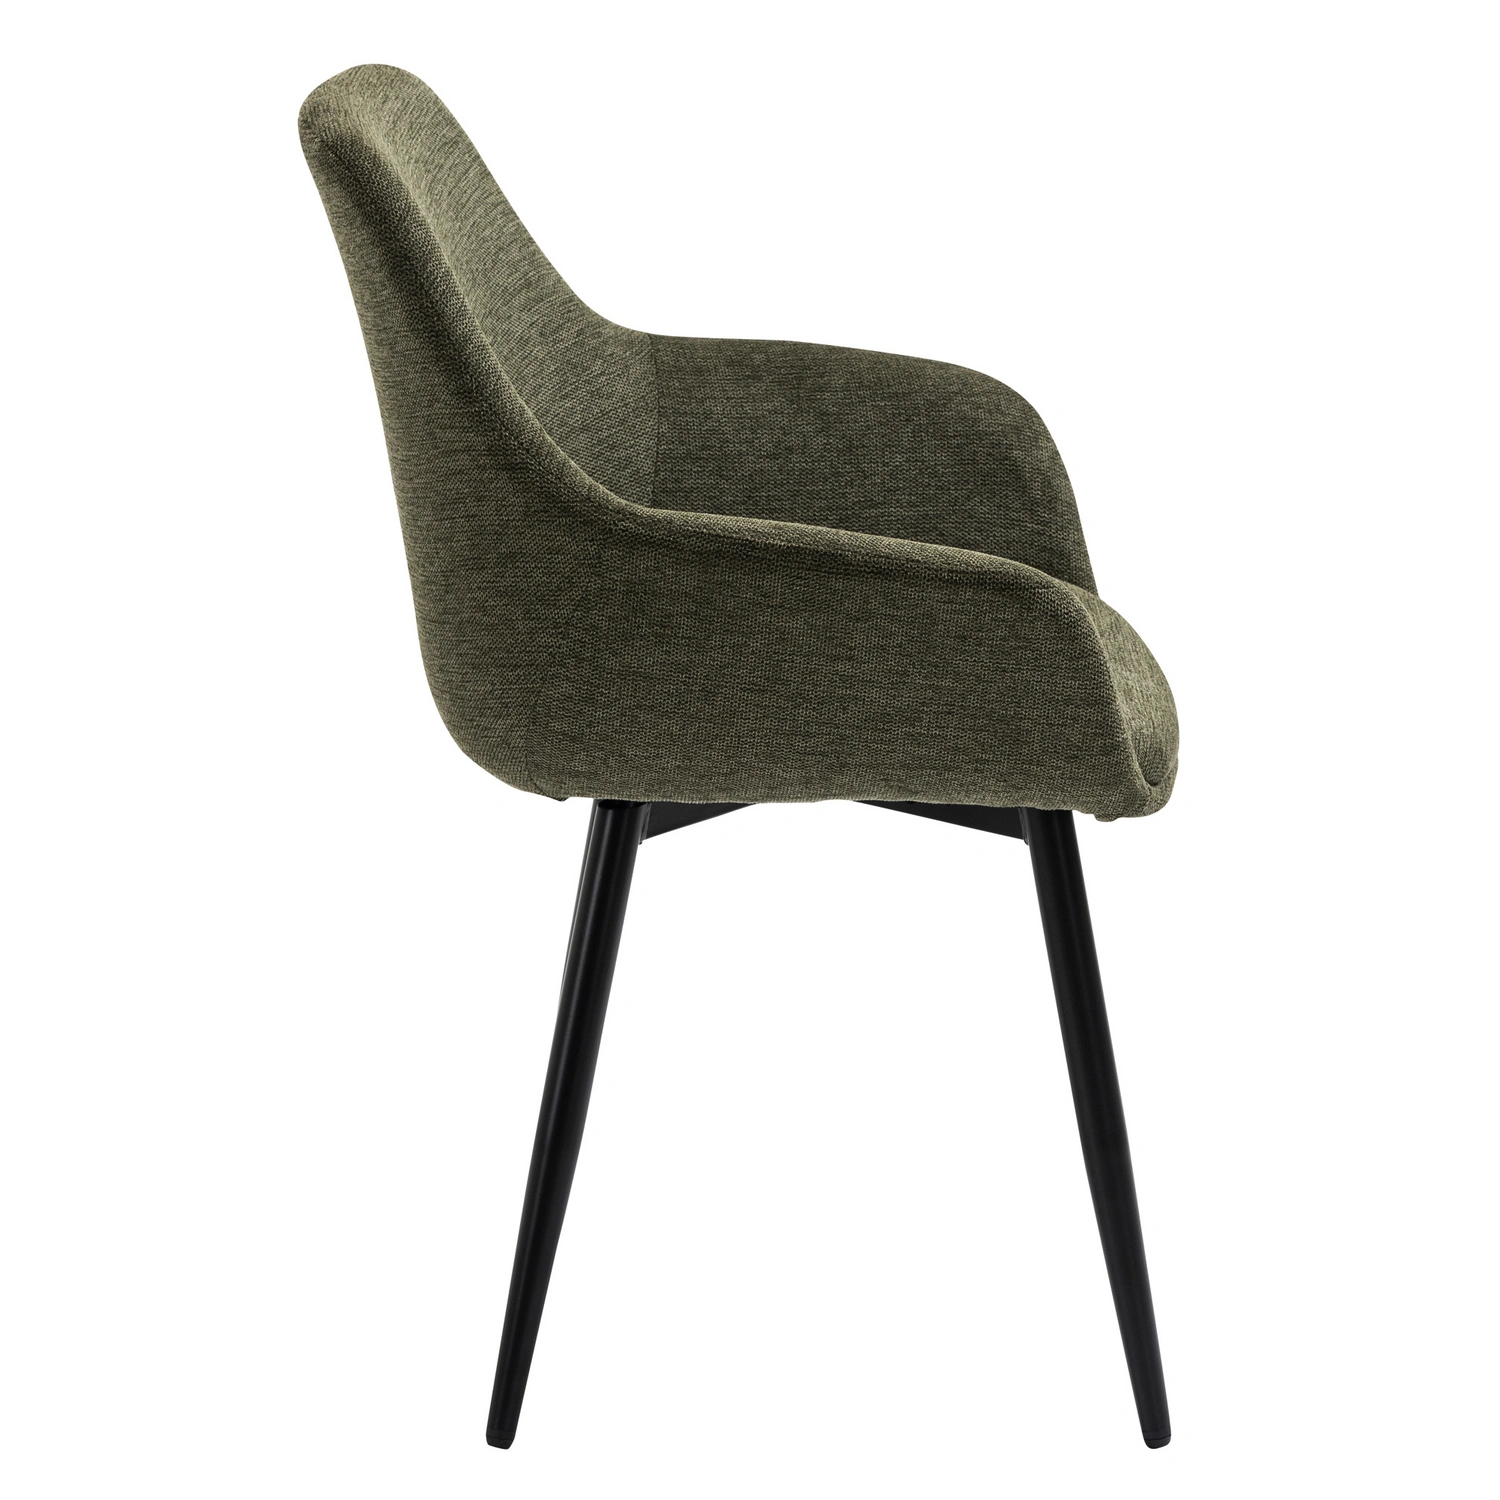 SalesFever Stuhl, Höhe: 86 cm, grün/schwarz, 2 stk